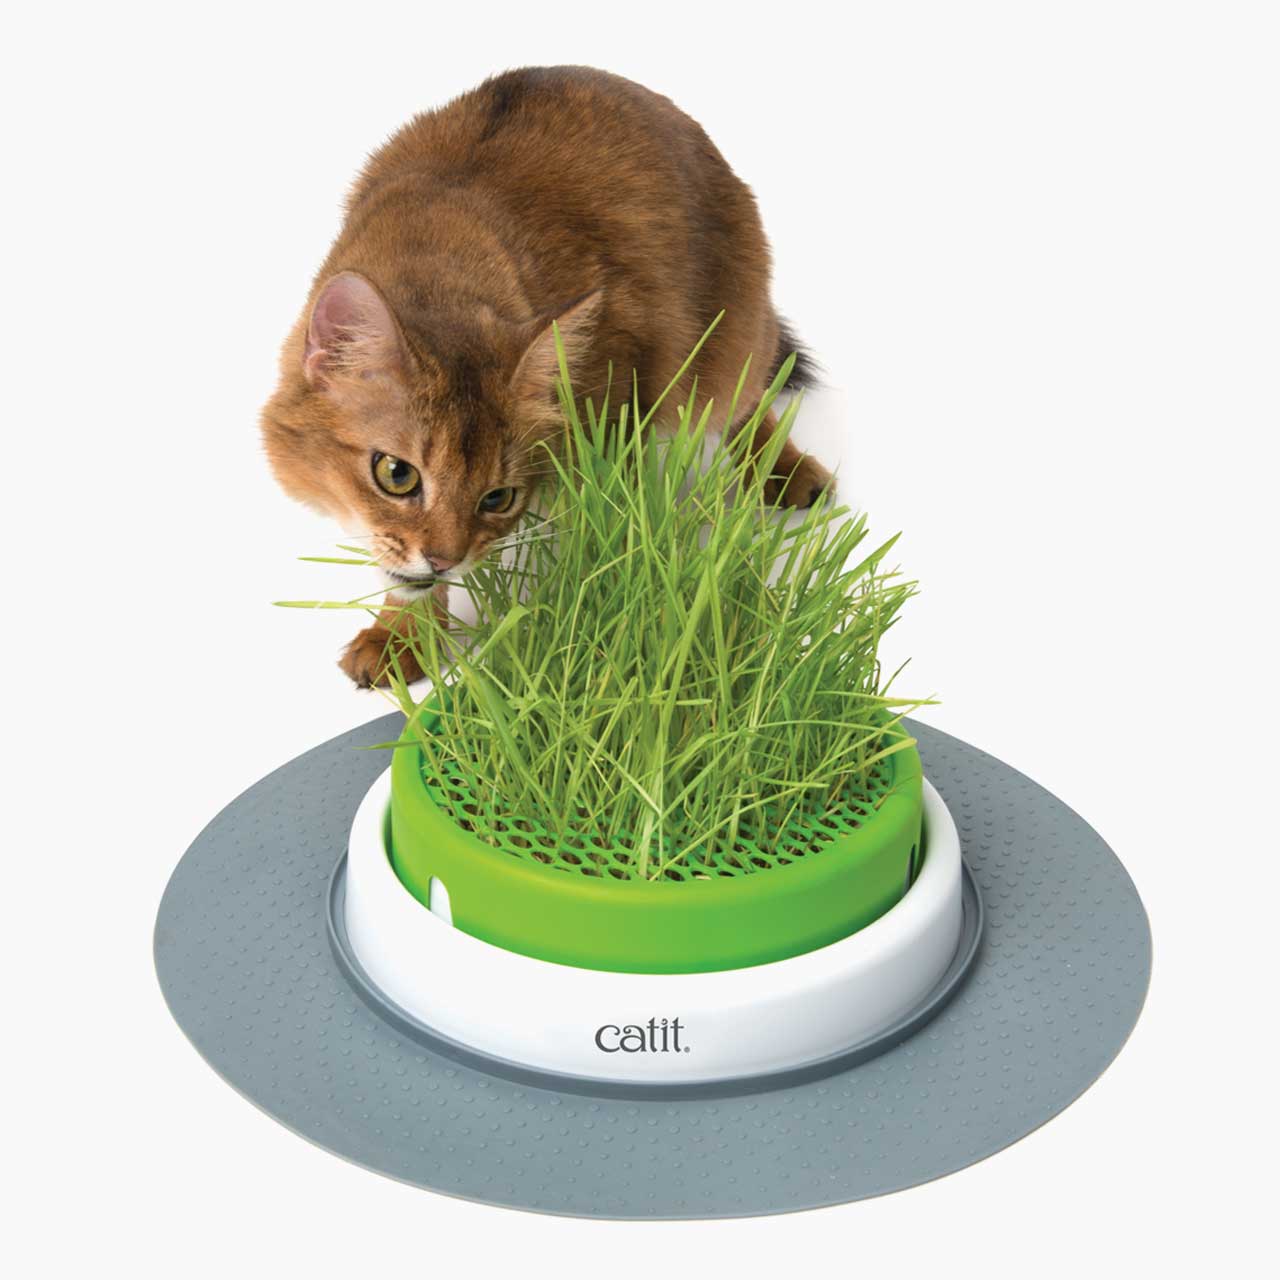 Gato mastigando erva no Grass Planter